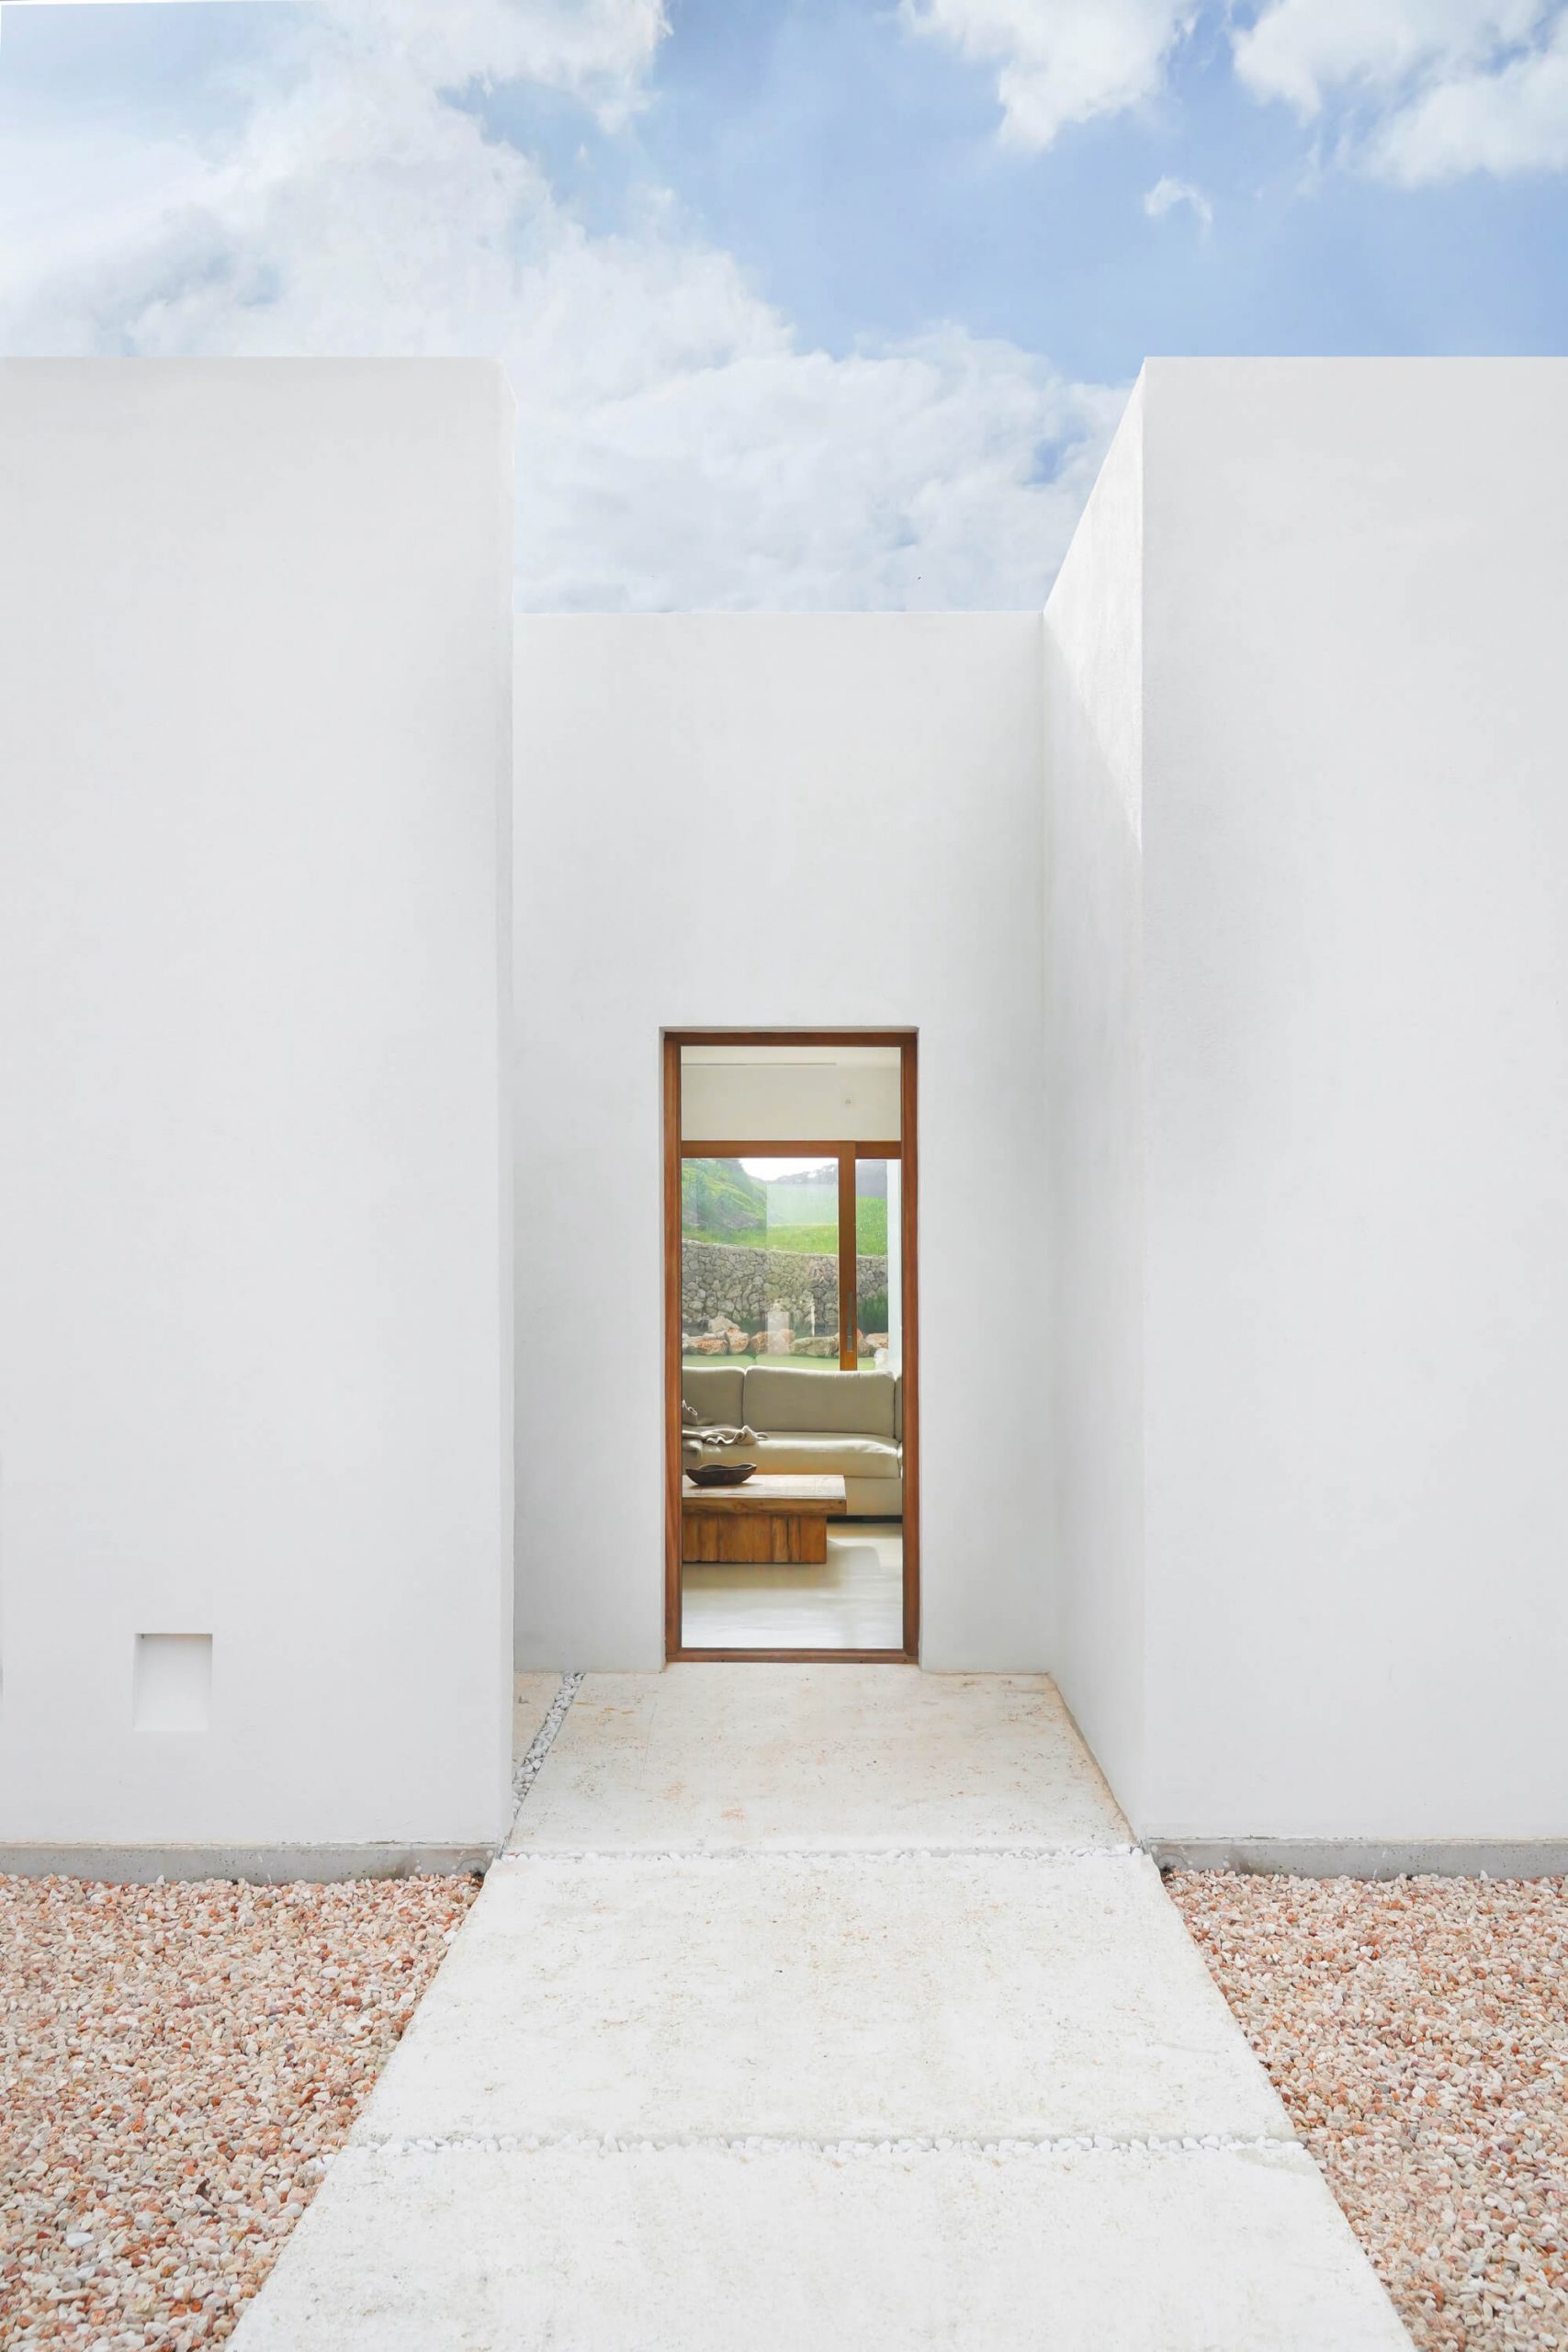 CasaE - Marina Senabre, Casa Minimalista fachada branca com janela quadrada, casa de campo.